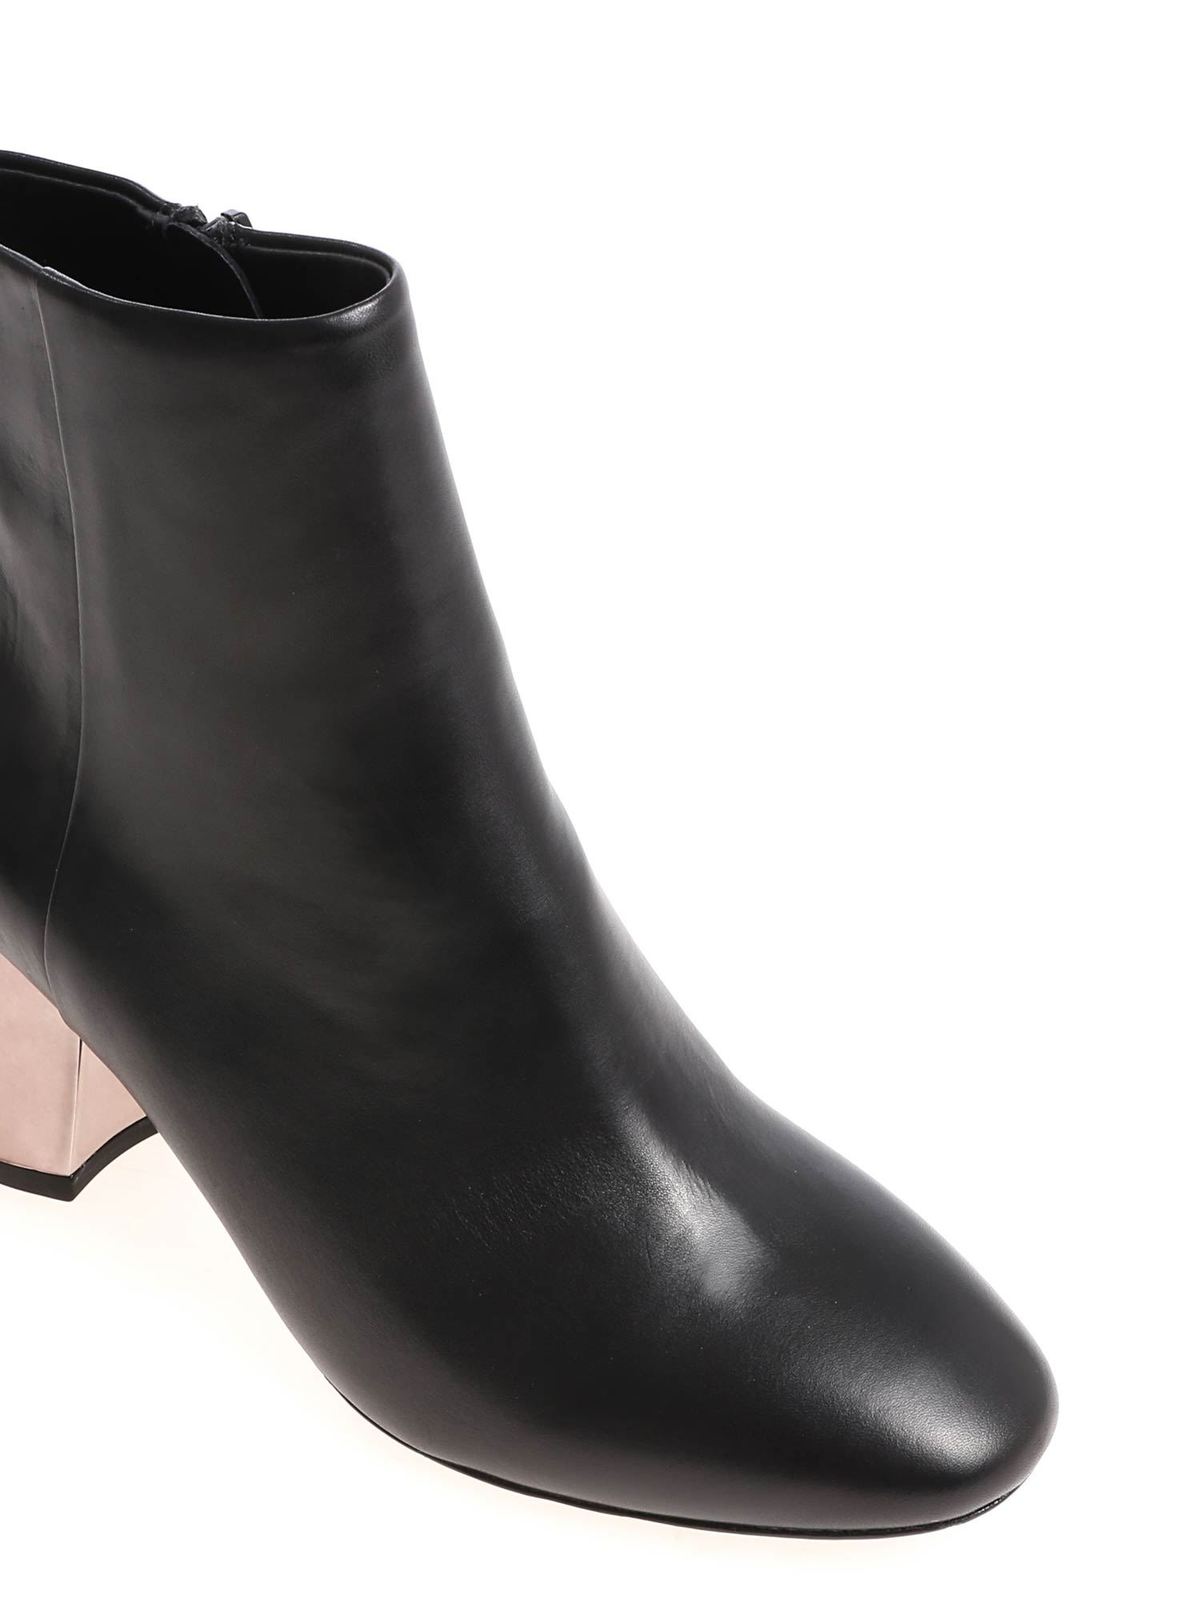 black booties with silver heel